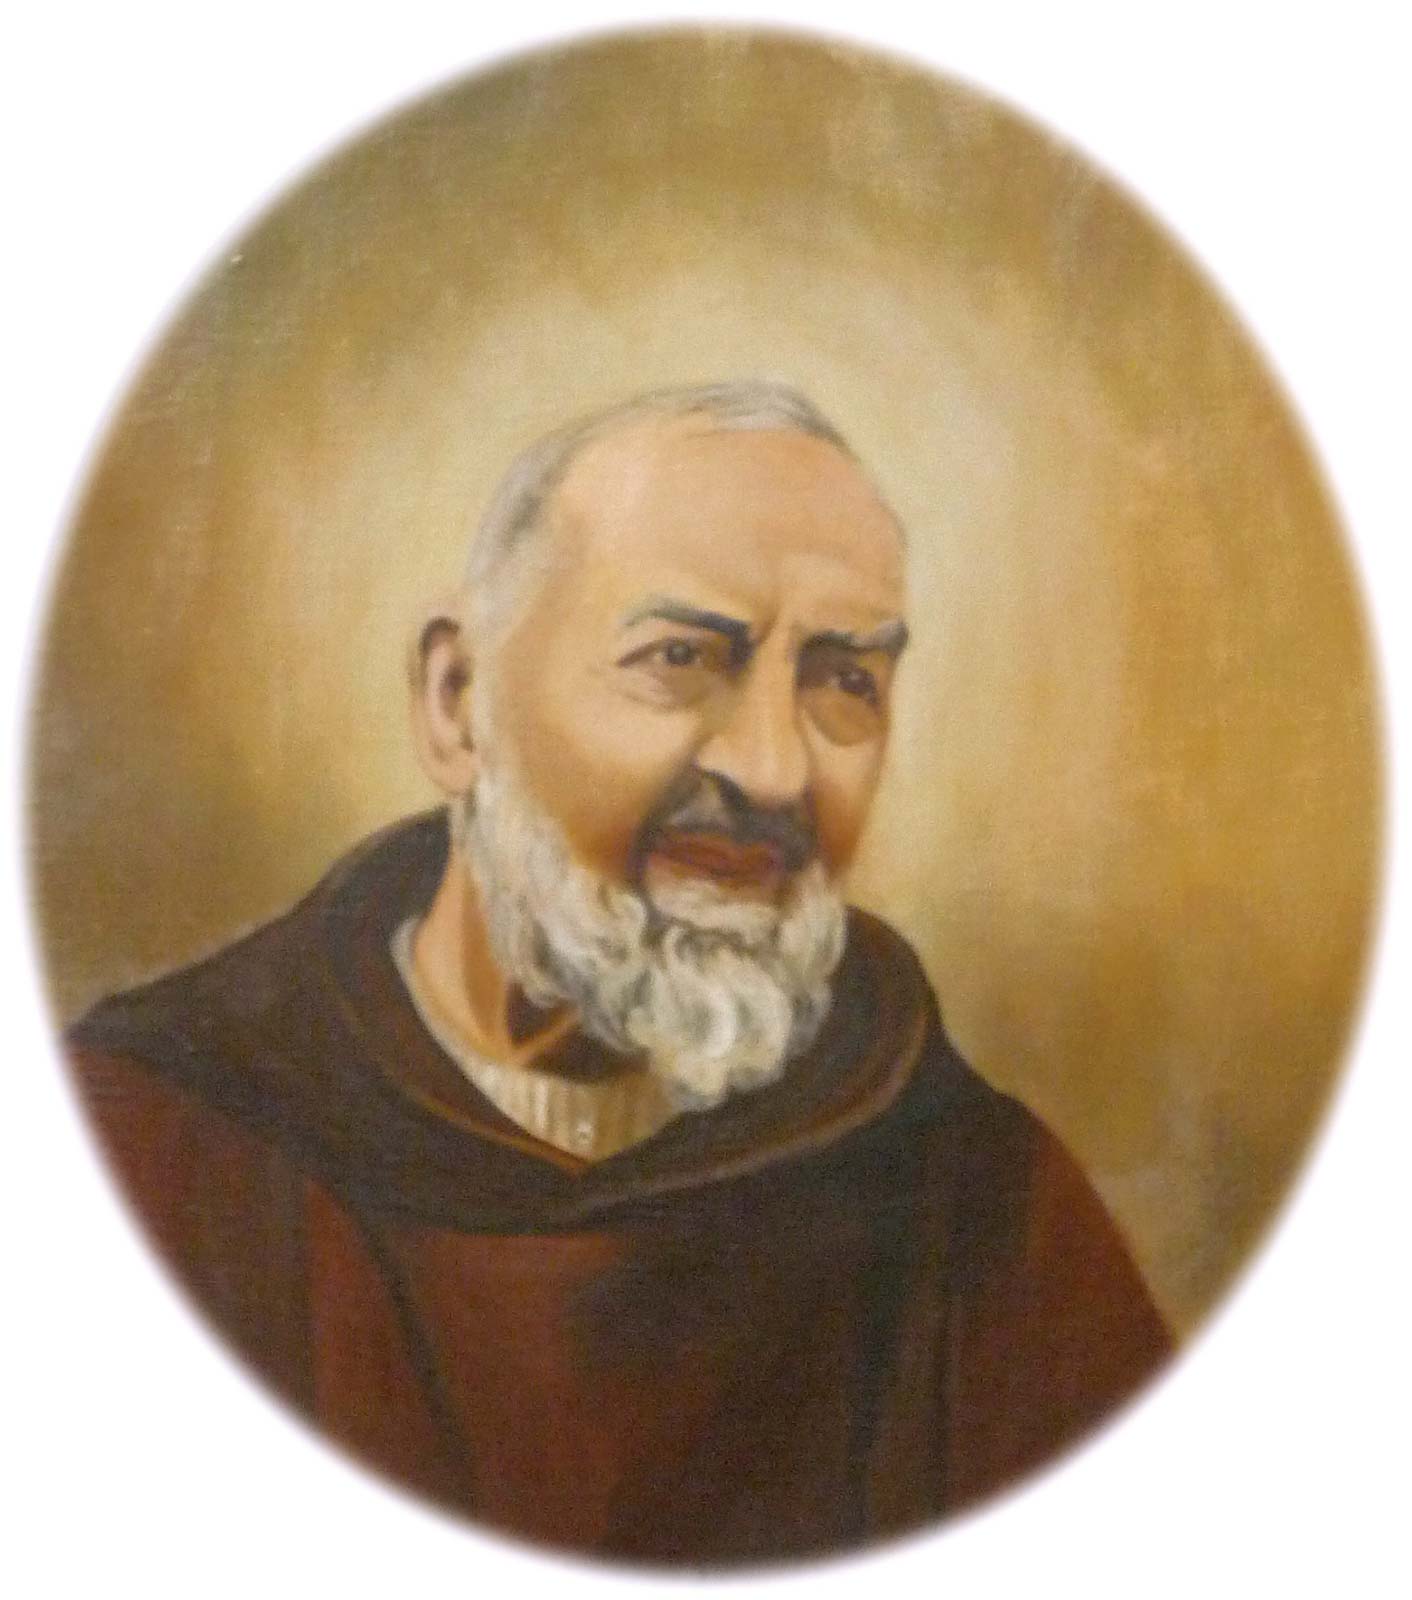 Padre-Pio